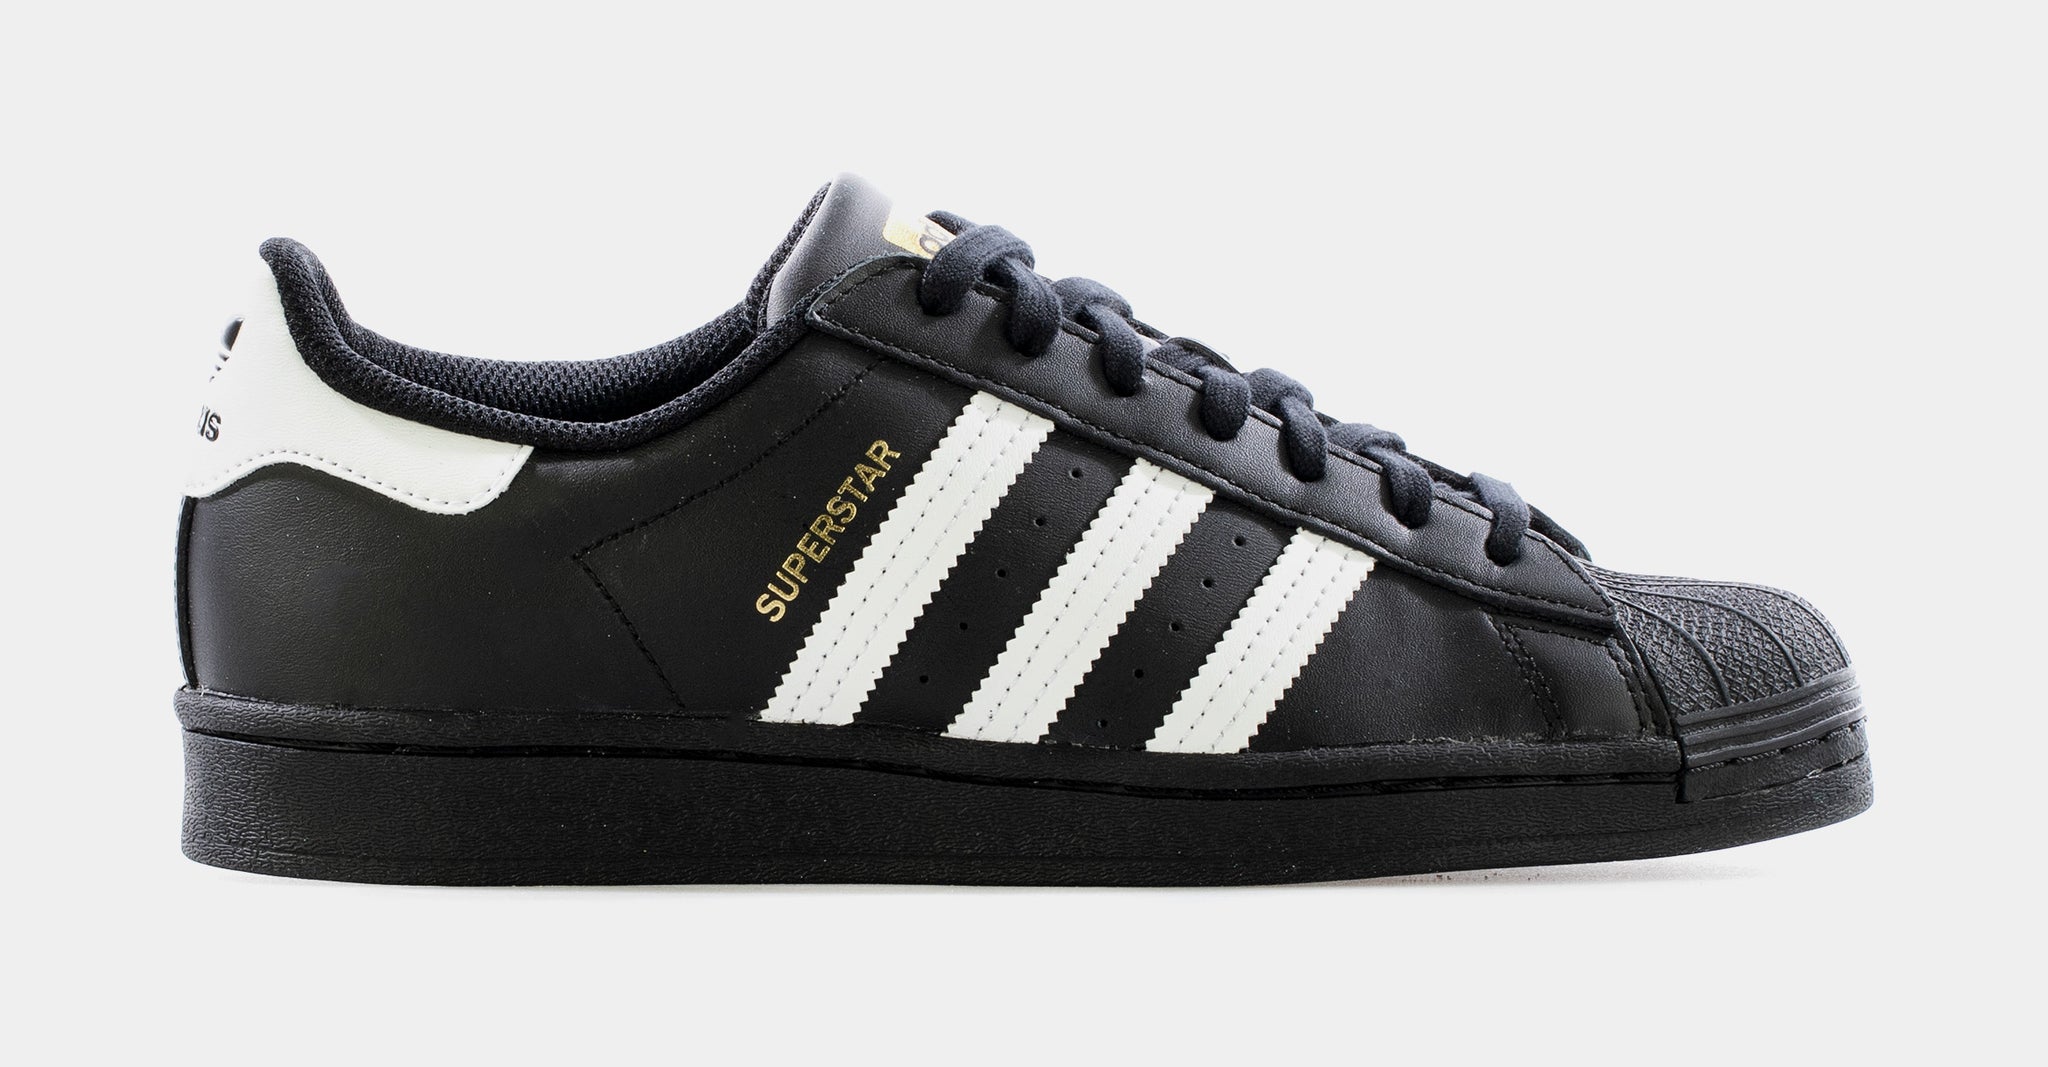 Mens Adidas Superstar OG Leather Trainers - All Sizes - Black/White/Gold  EG4958.